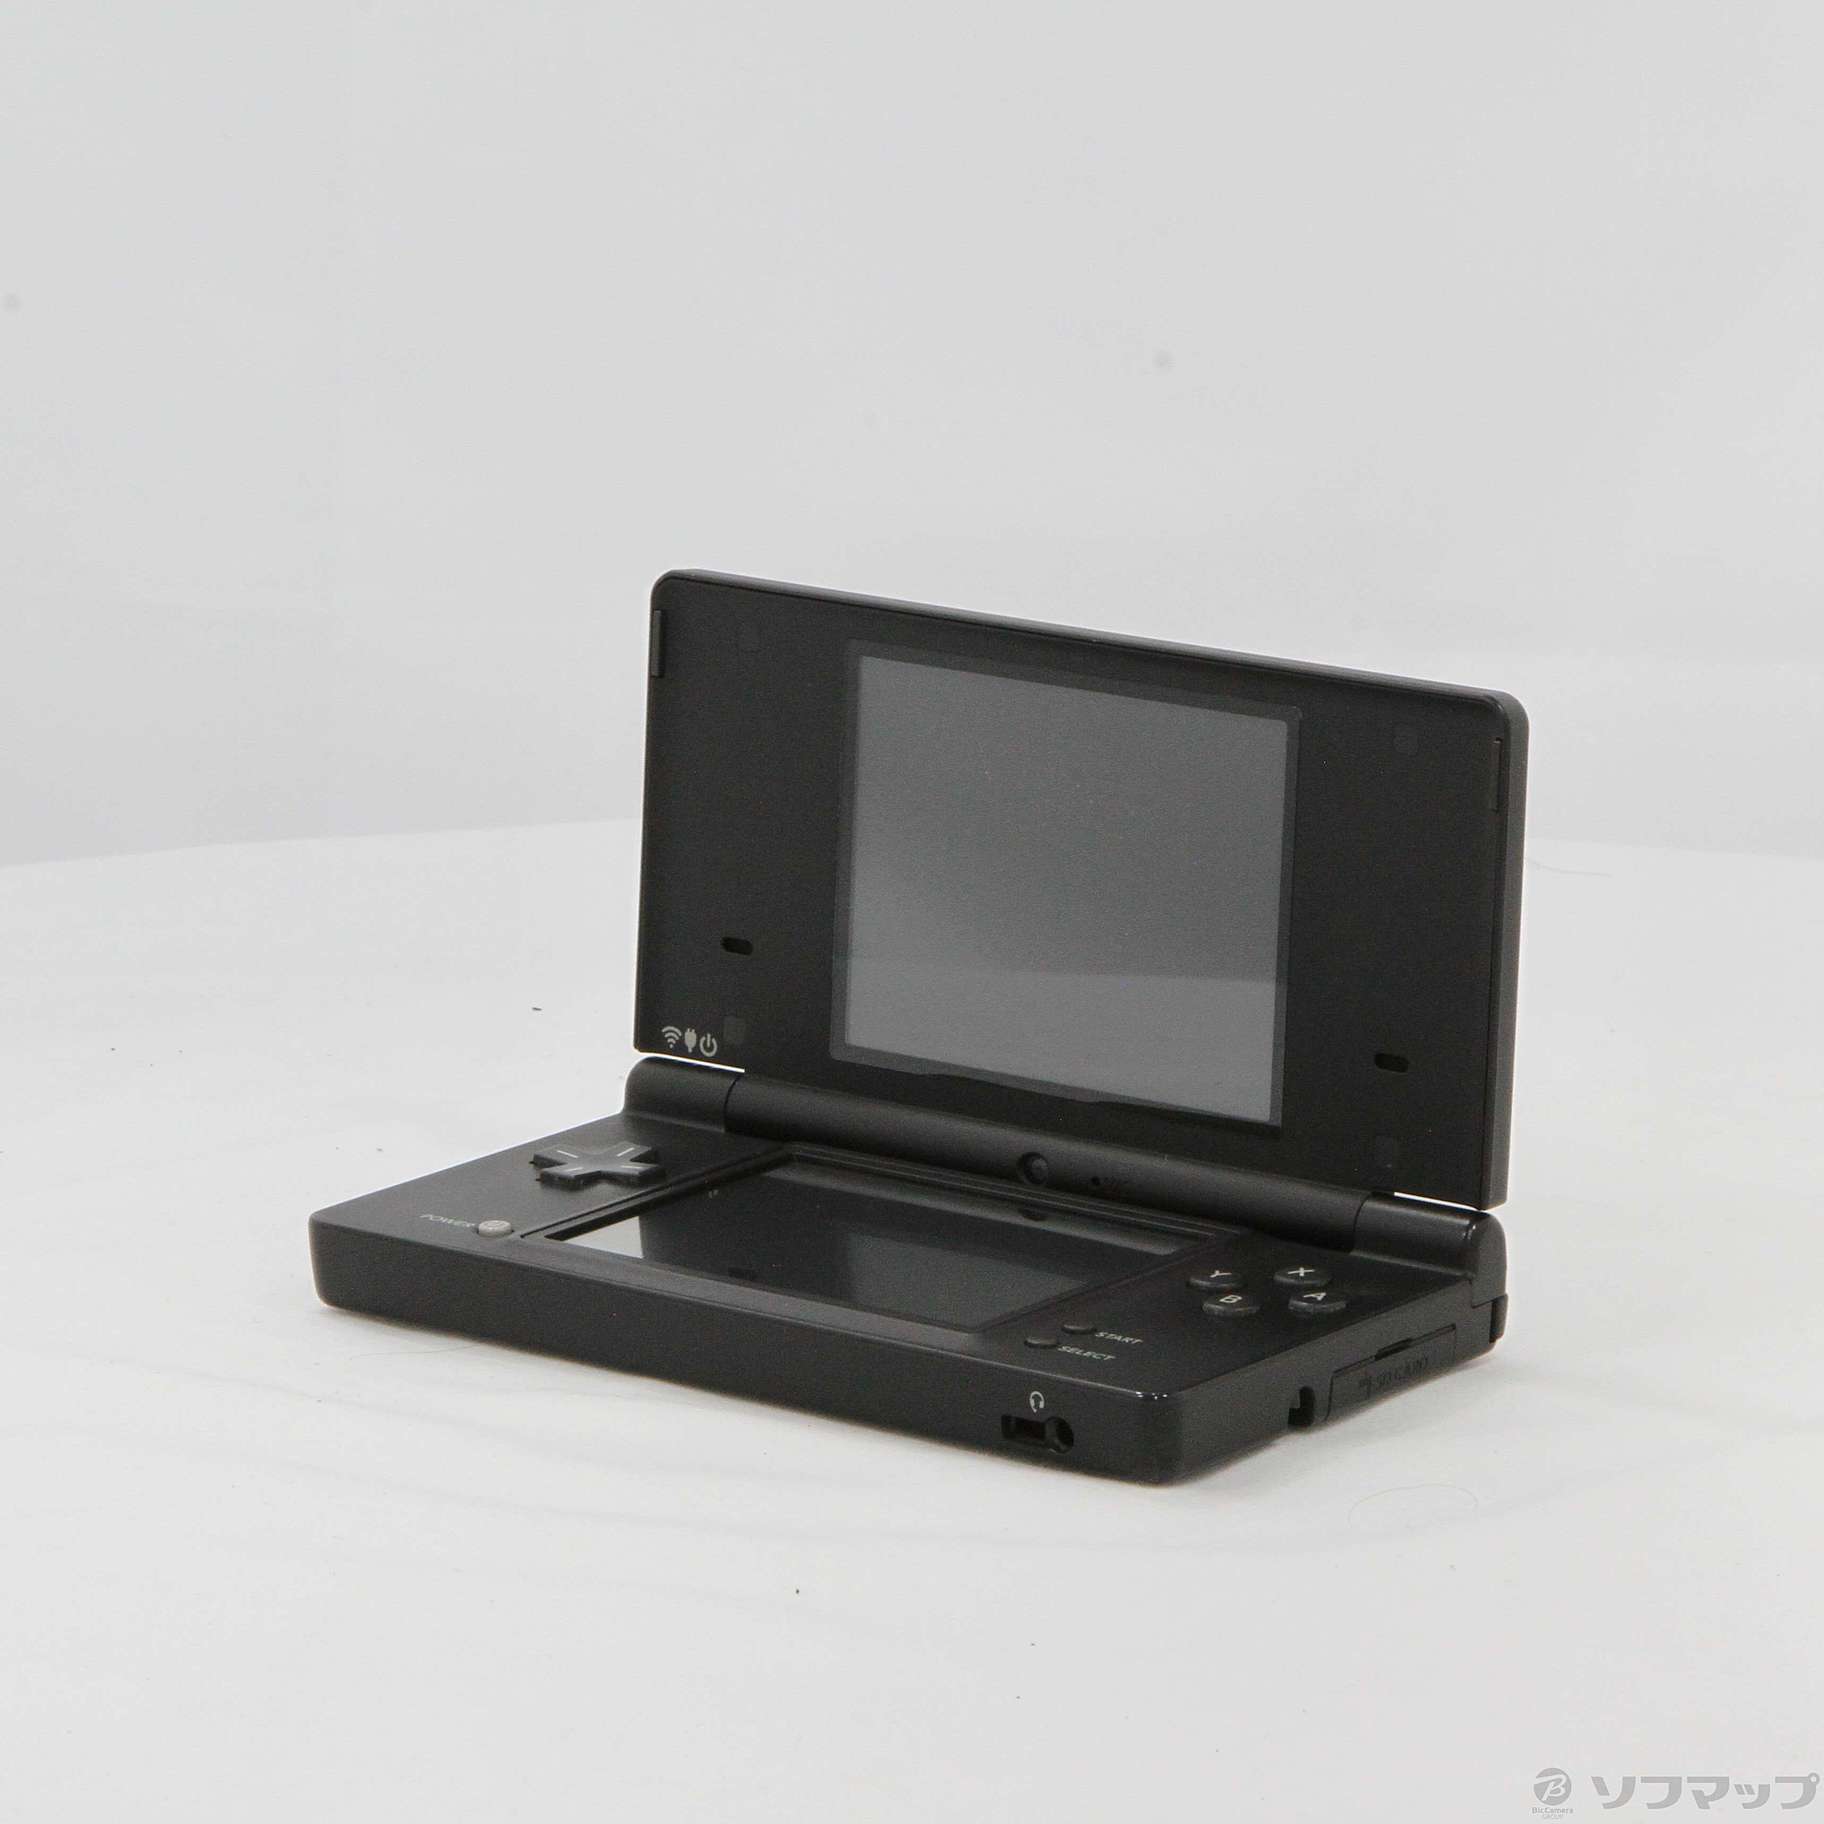 Nintendo DS ニンテンドー DSI BLACK - 携帯用ゲーム本体